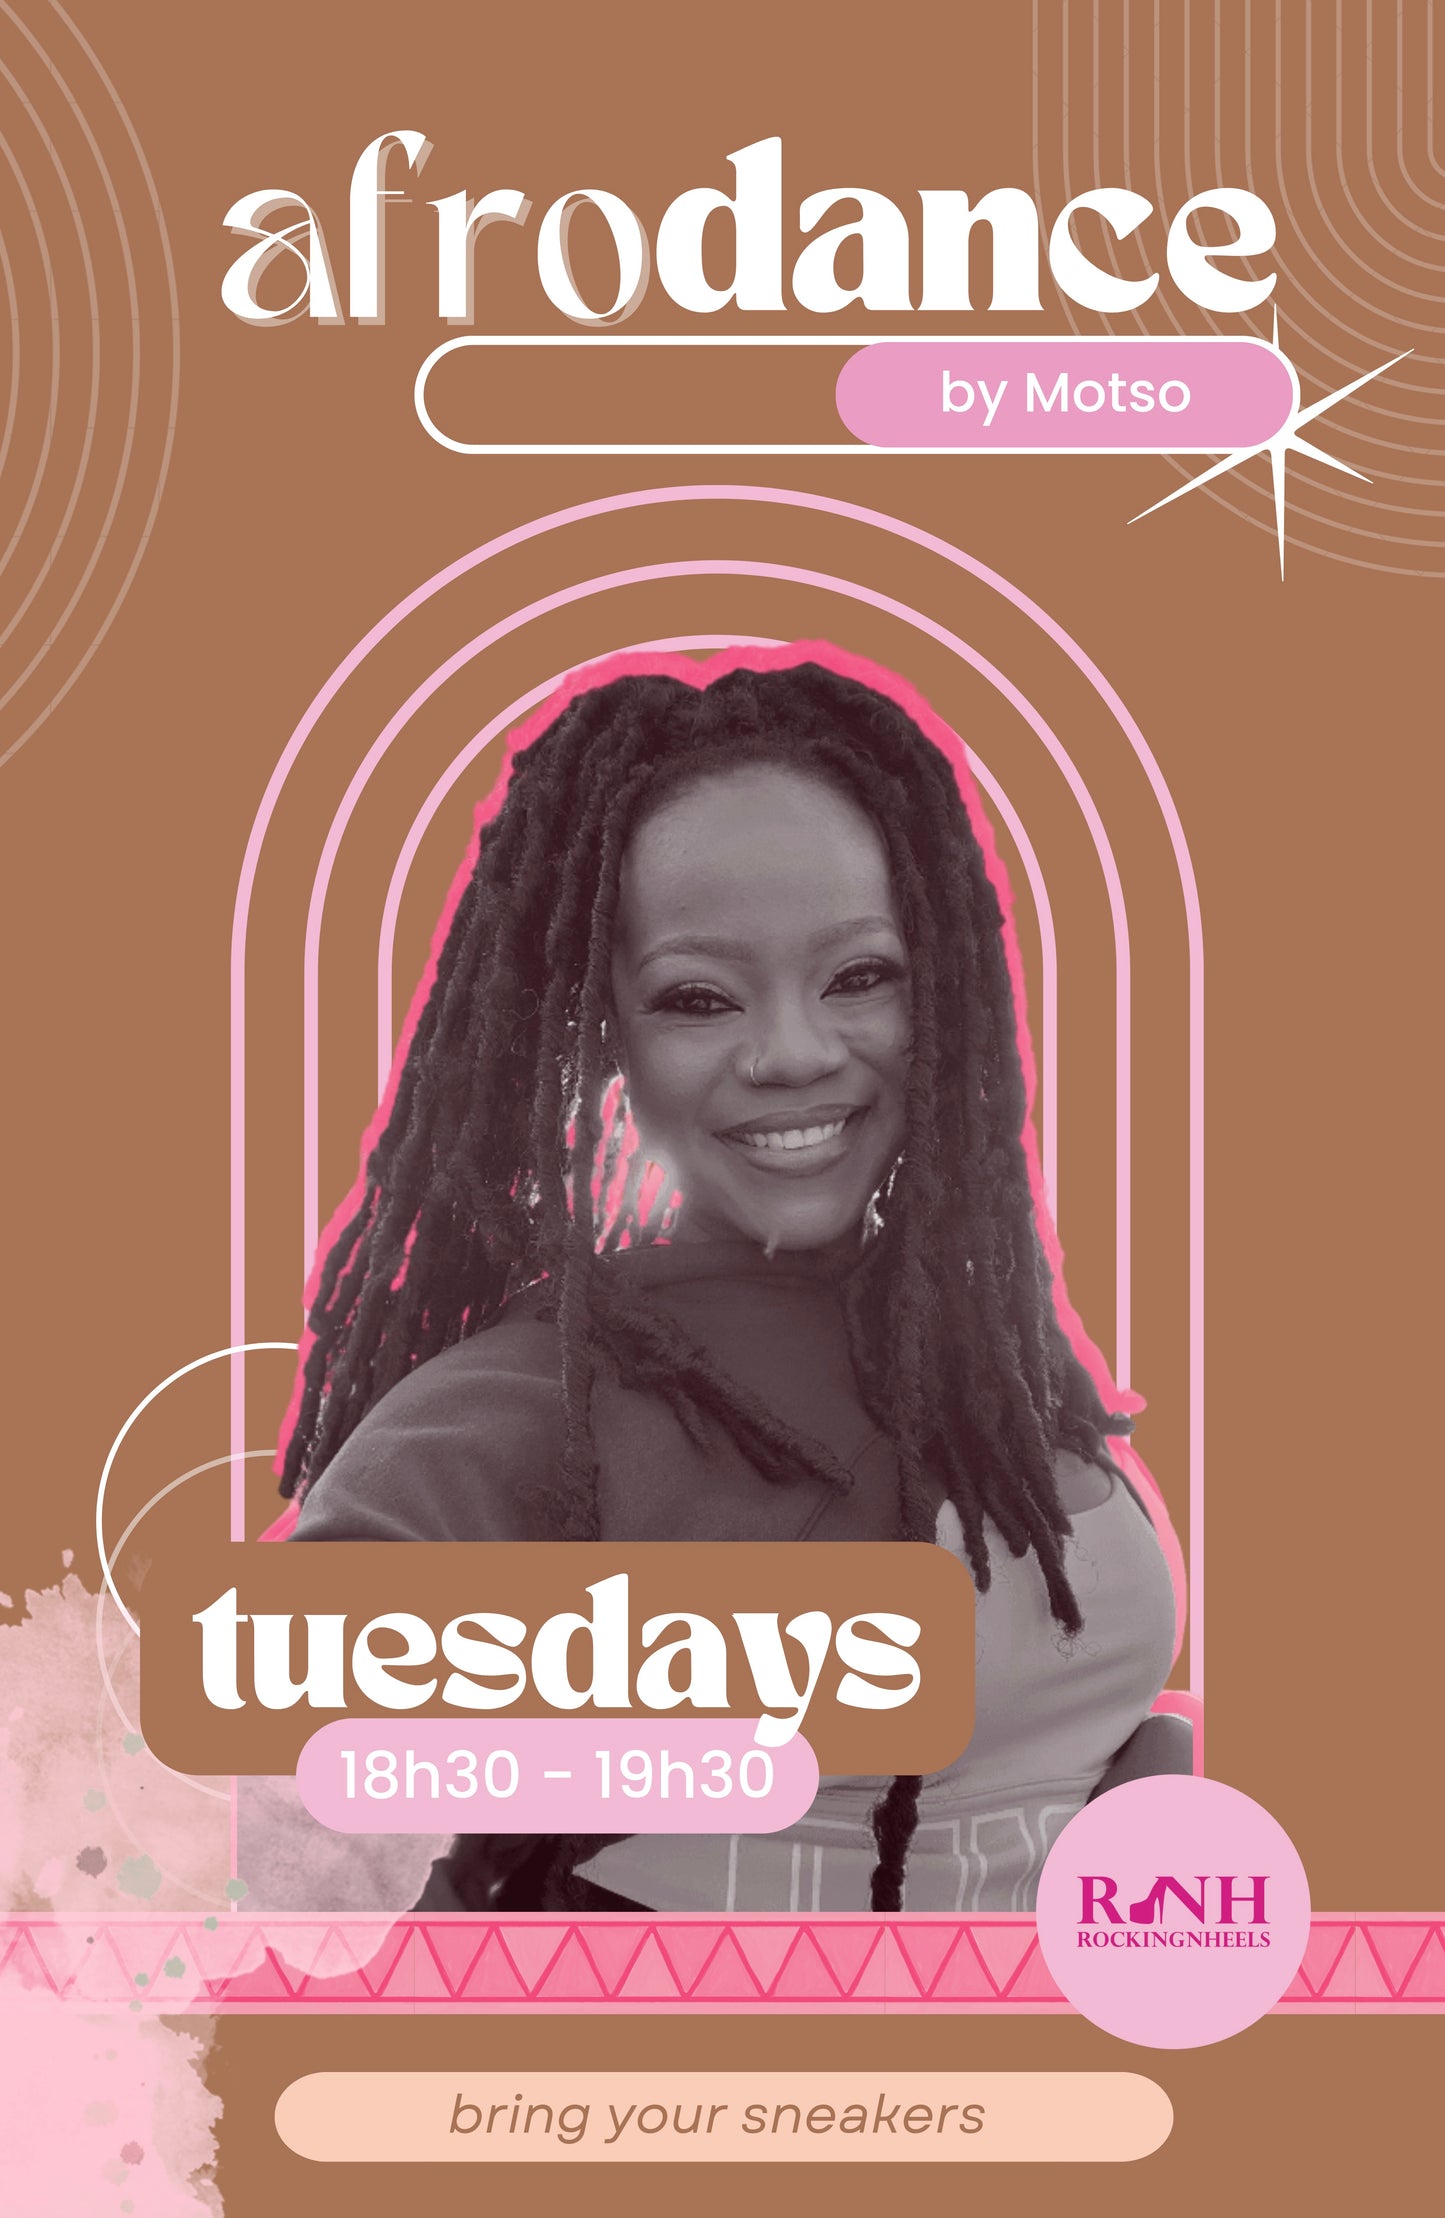 AfroDance Tuesday - by Motso